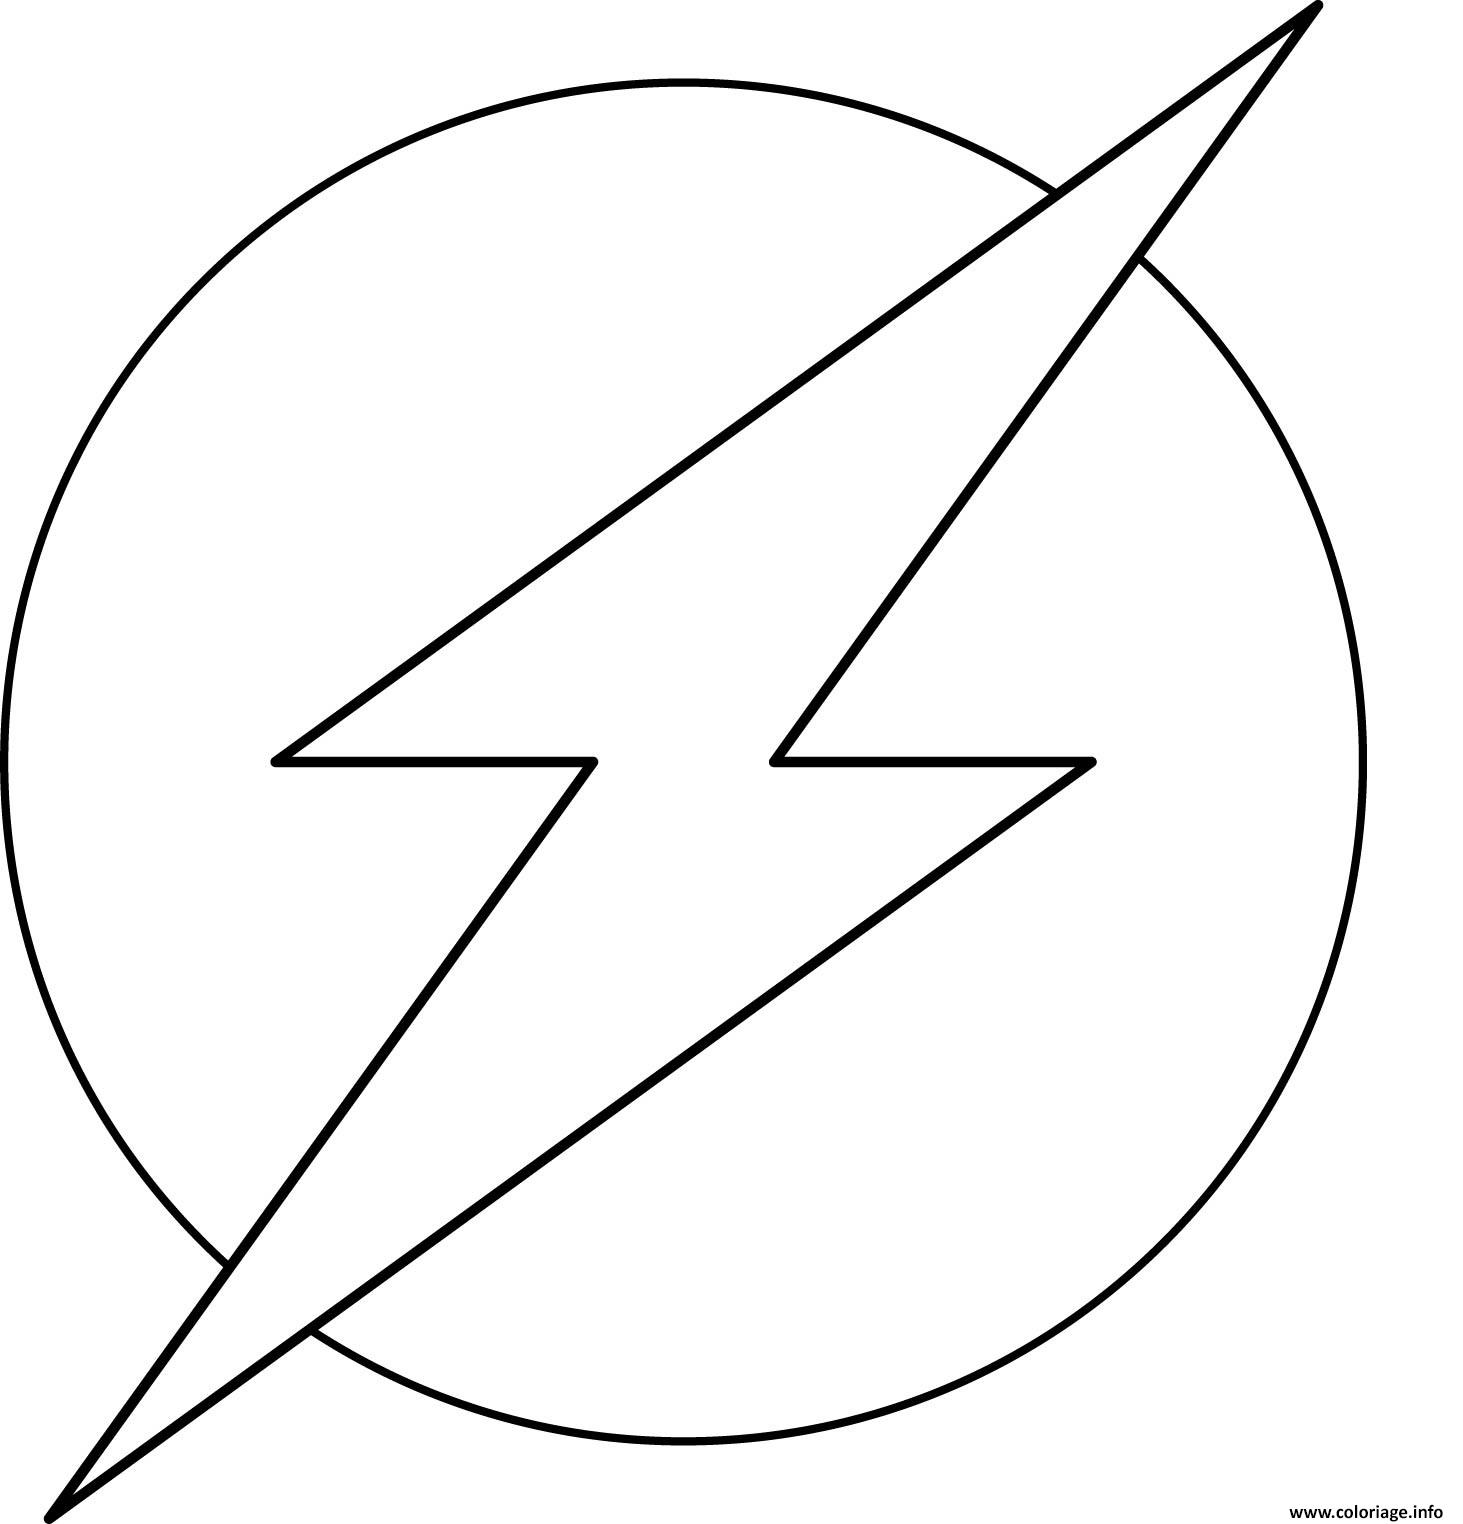 Dessin flash super heros logo officiel marvel Coloriage Gratuit à Imprimer